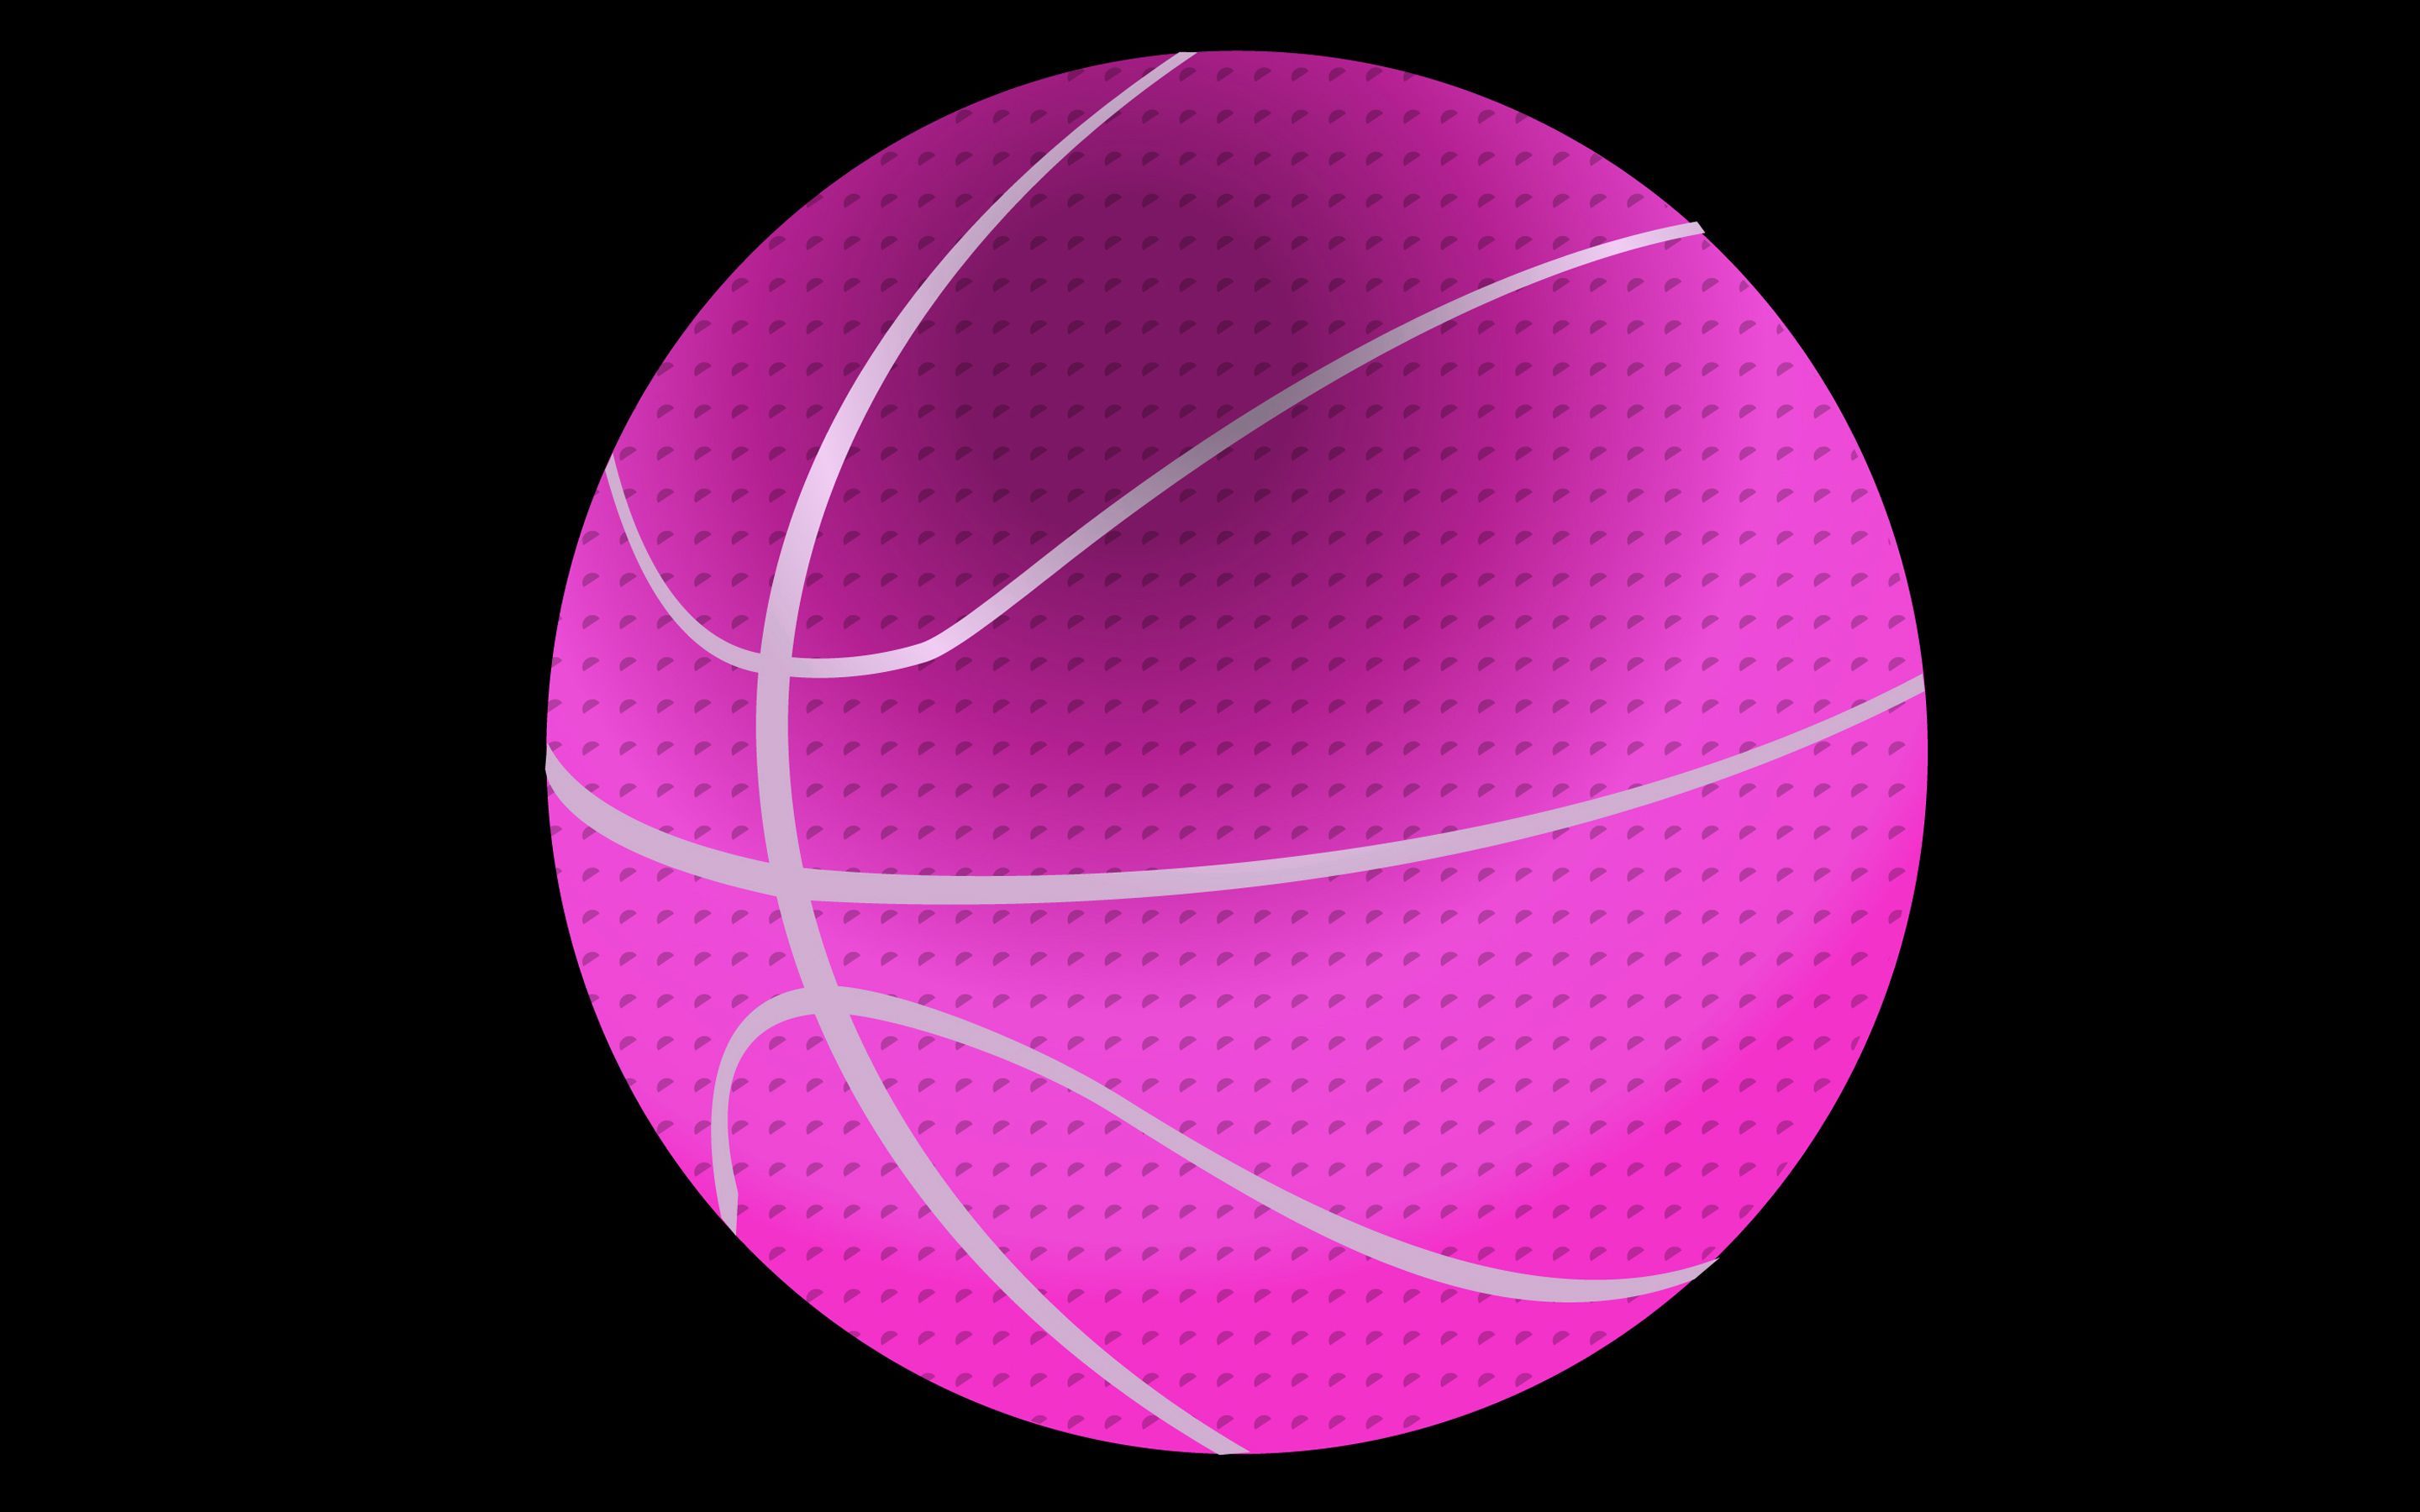 Girly Pink Basketball Wallpapers